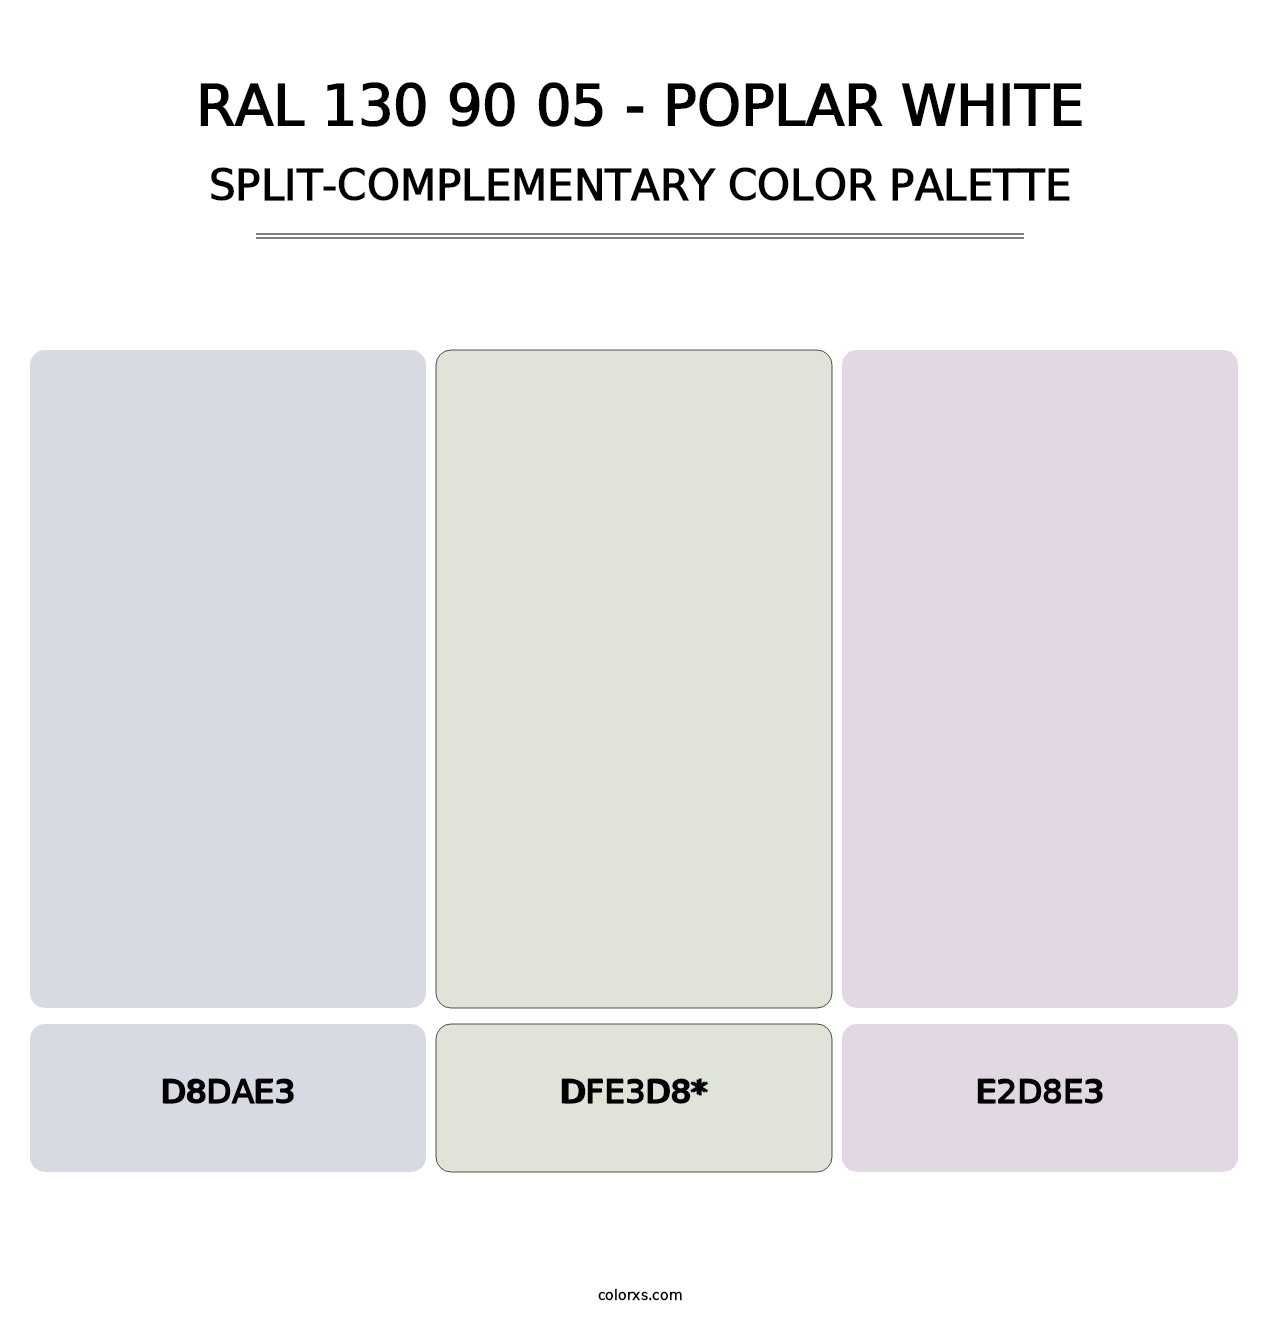 RAL 130 90 05 - Poplar White - Split-Complementary Color Palette